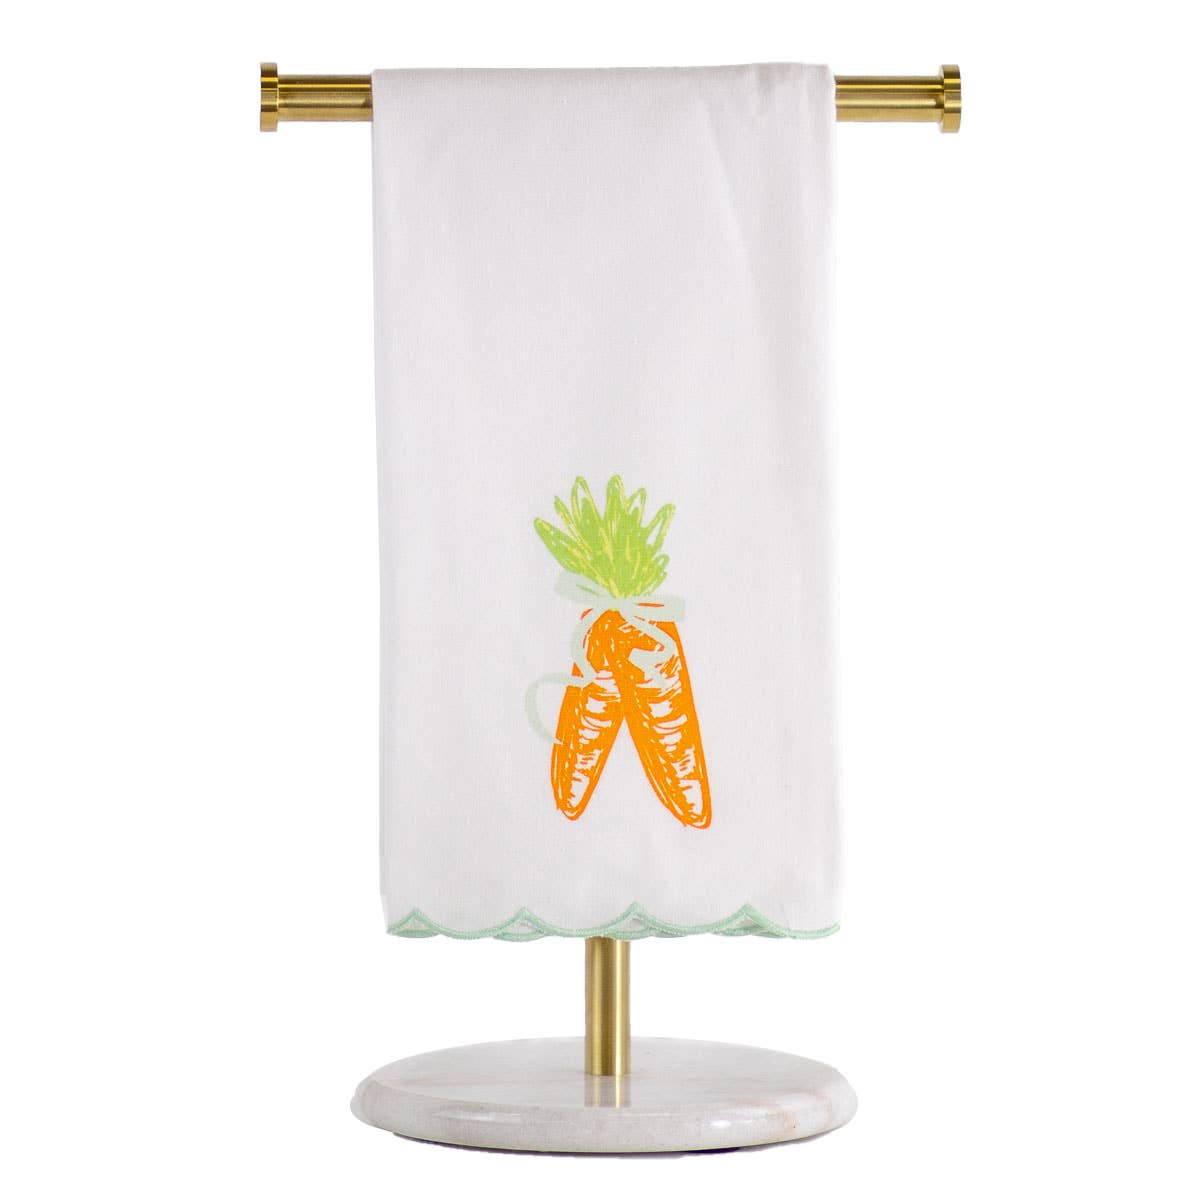 The Royal Standard - Carrot Scallop Edge Hand Towel   White/Orange/Light Blue   20x28